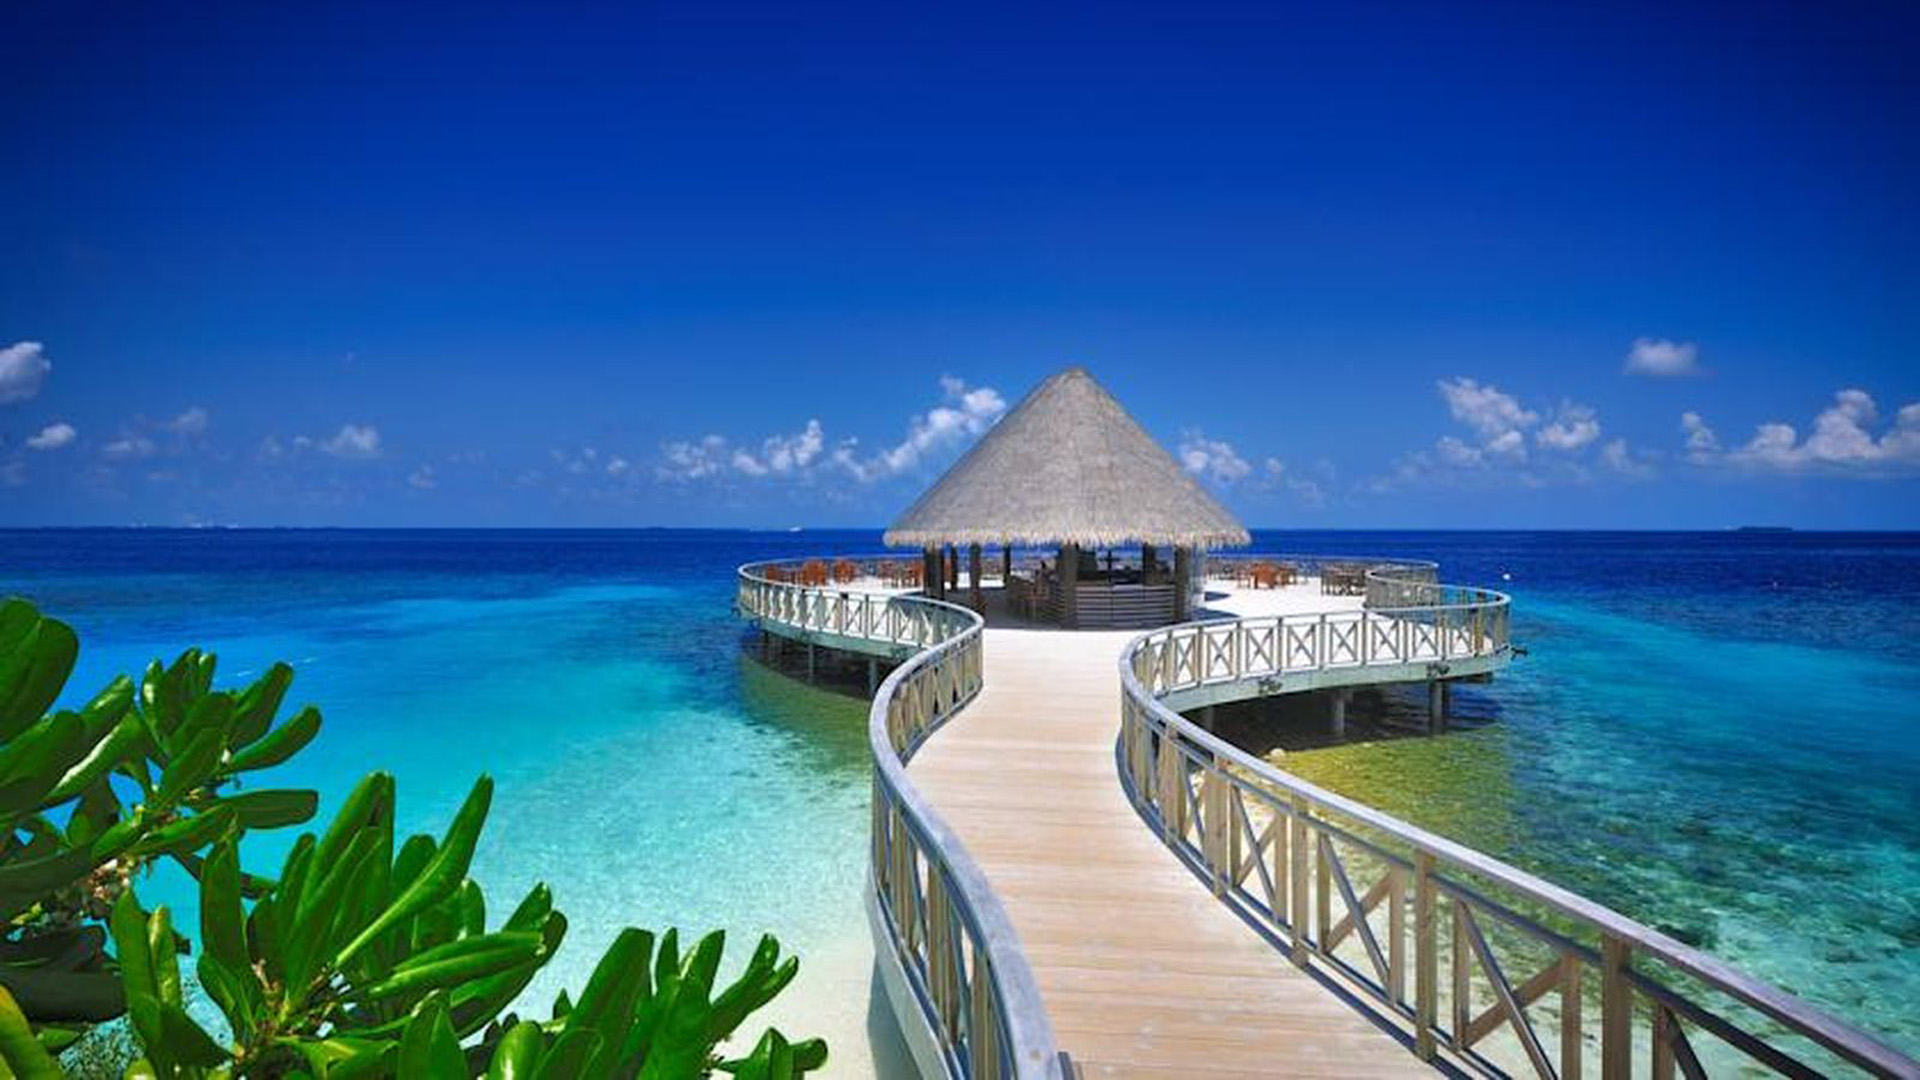 Bandos island. Bandos Island Resort Spa Мальдивы. Bandos Maldives 4 Мальдивы. Мальдивы Мале остров Bandos. Bandos Maldives (ex. Bandos Island Resort) 4*.